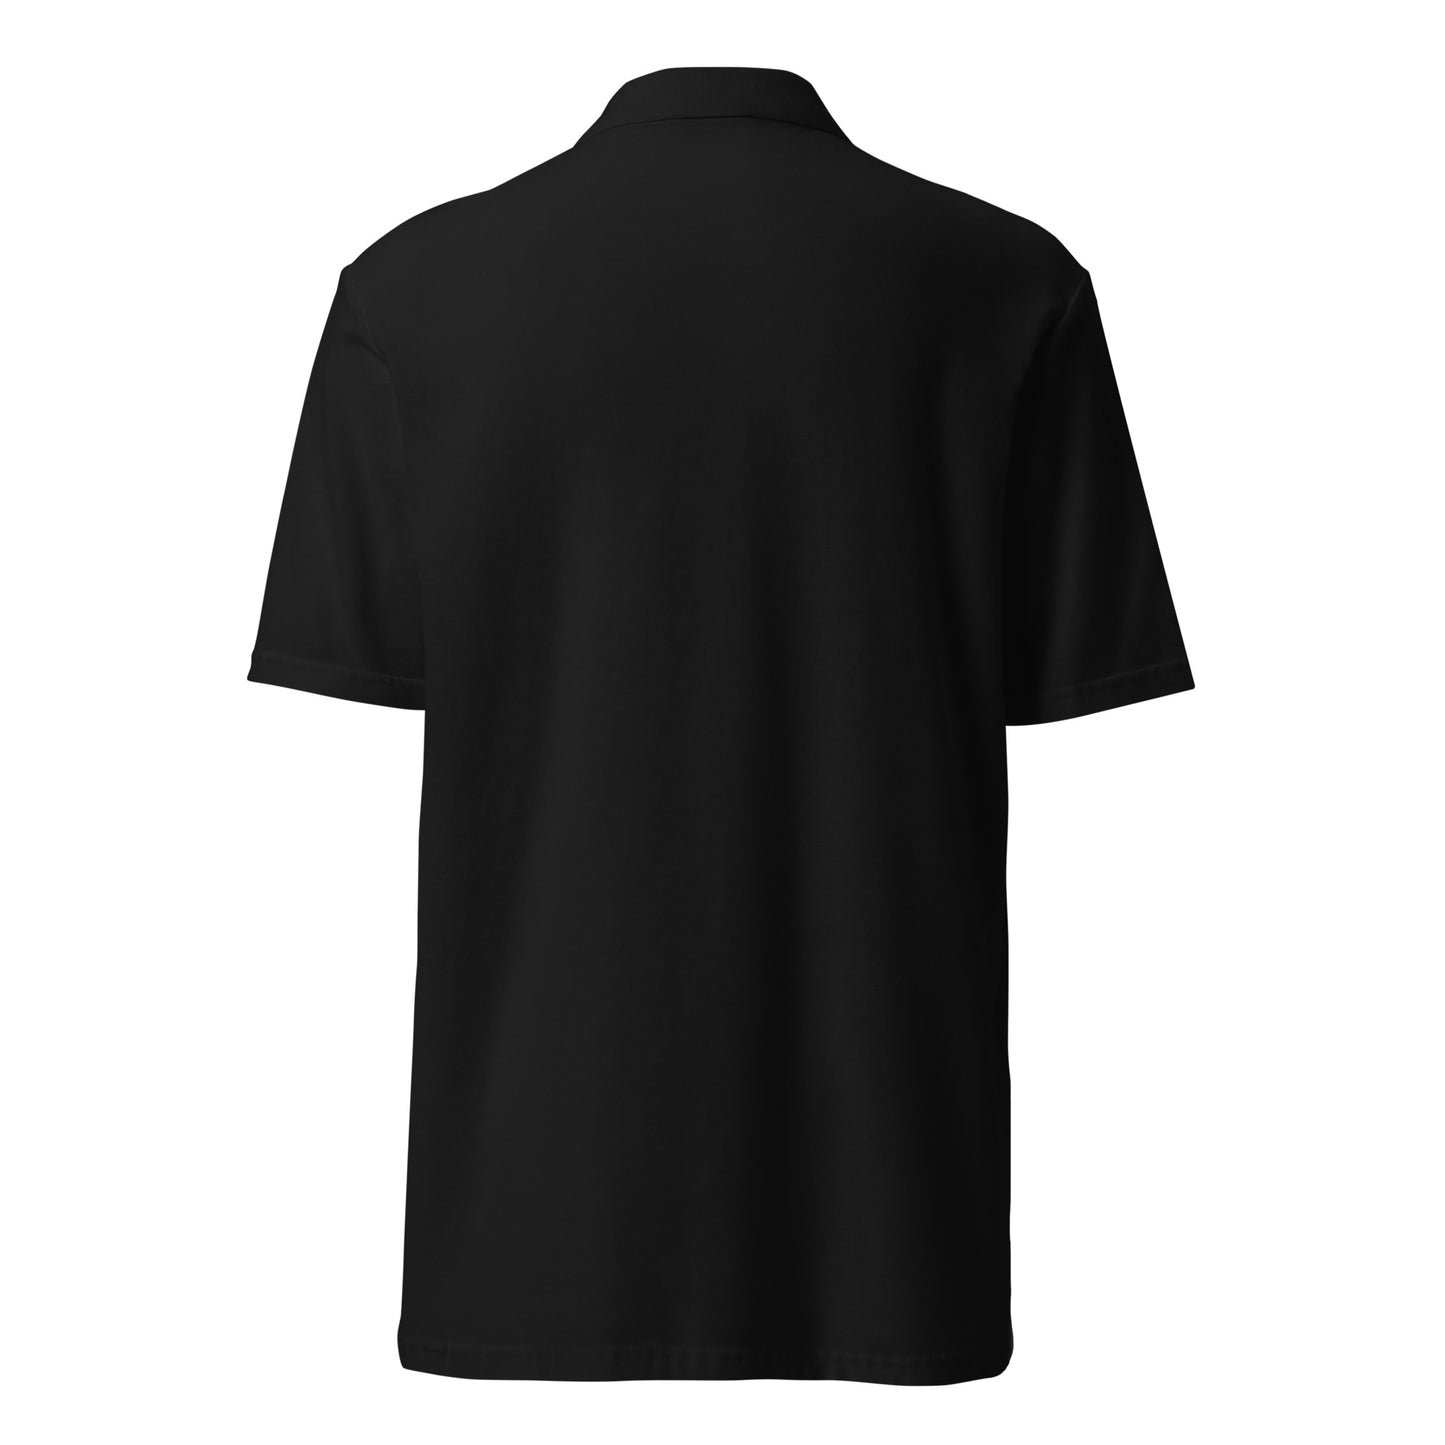 Great Oak Unisex pique polo shirt